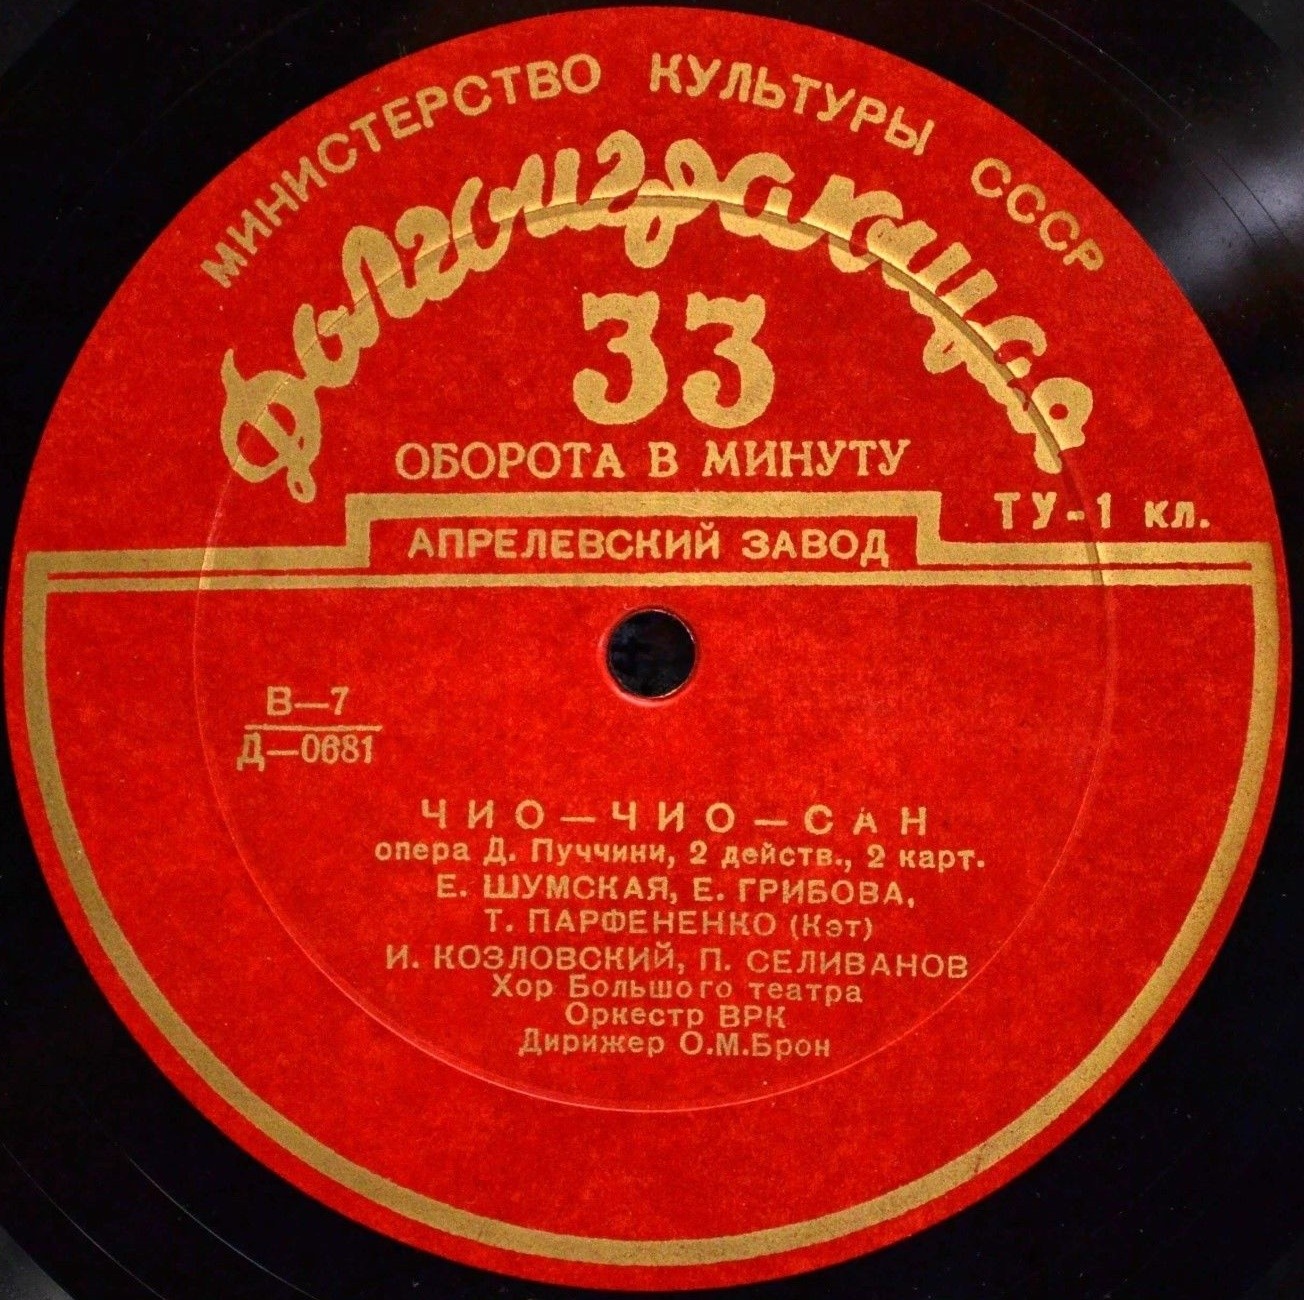 Дж. ПУЧЧИНИ (1858–1924): «Чио-Чио-сан», опера в 2 д. (О. Брон)